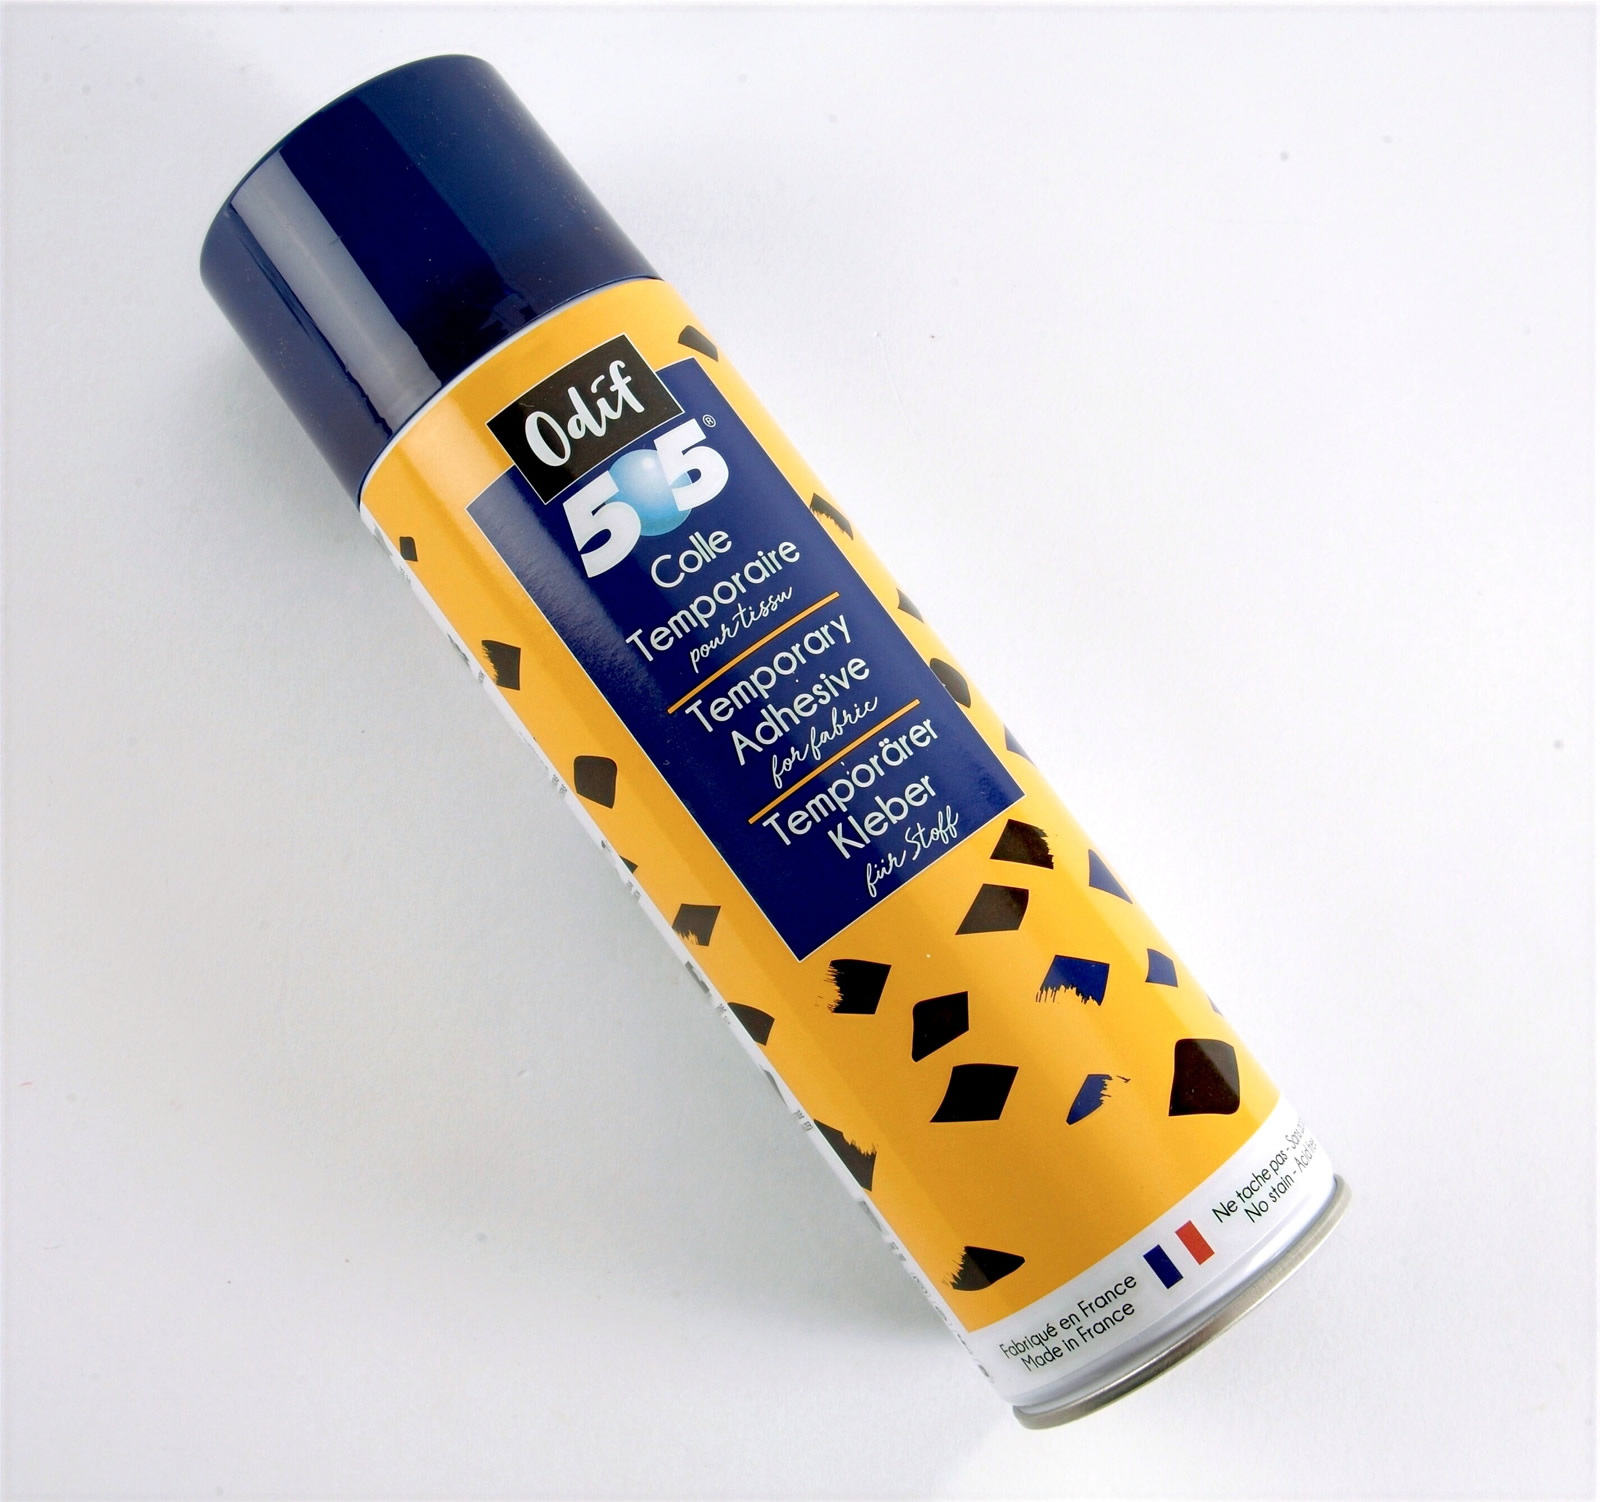 Odif USA 505 Spray & Fix Temporary Fabric Adhesive 3/Pk-12.4oz, 3 Pack